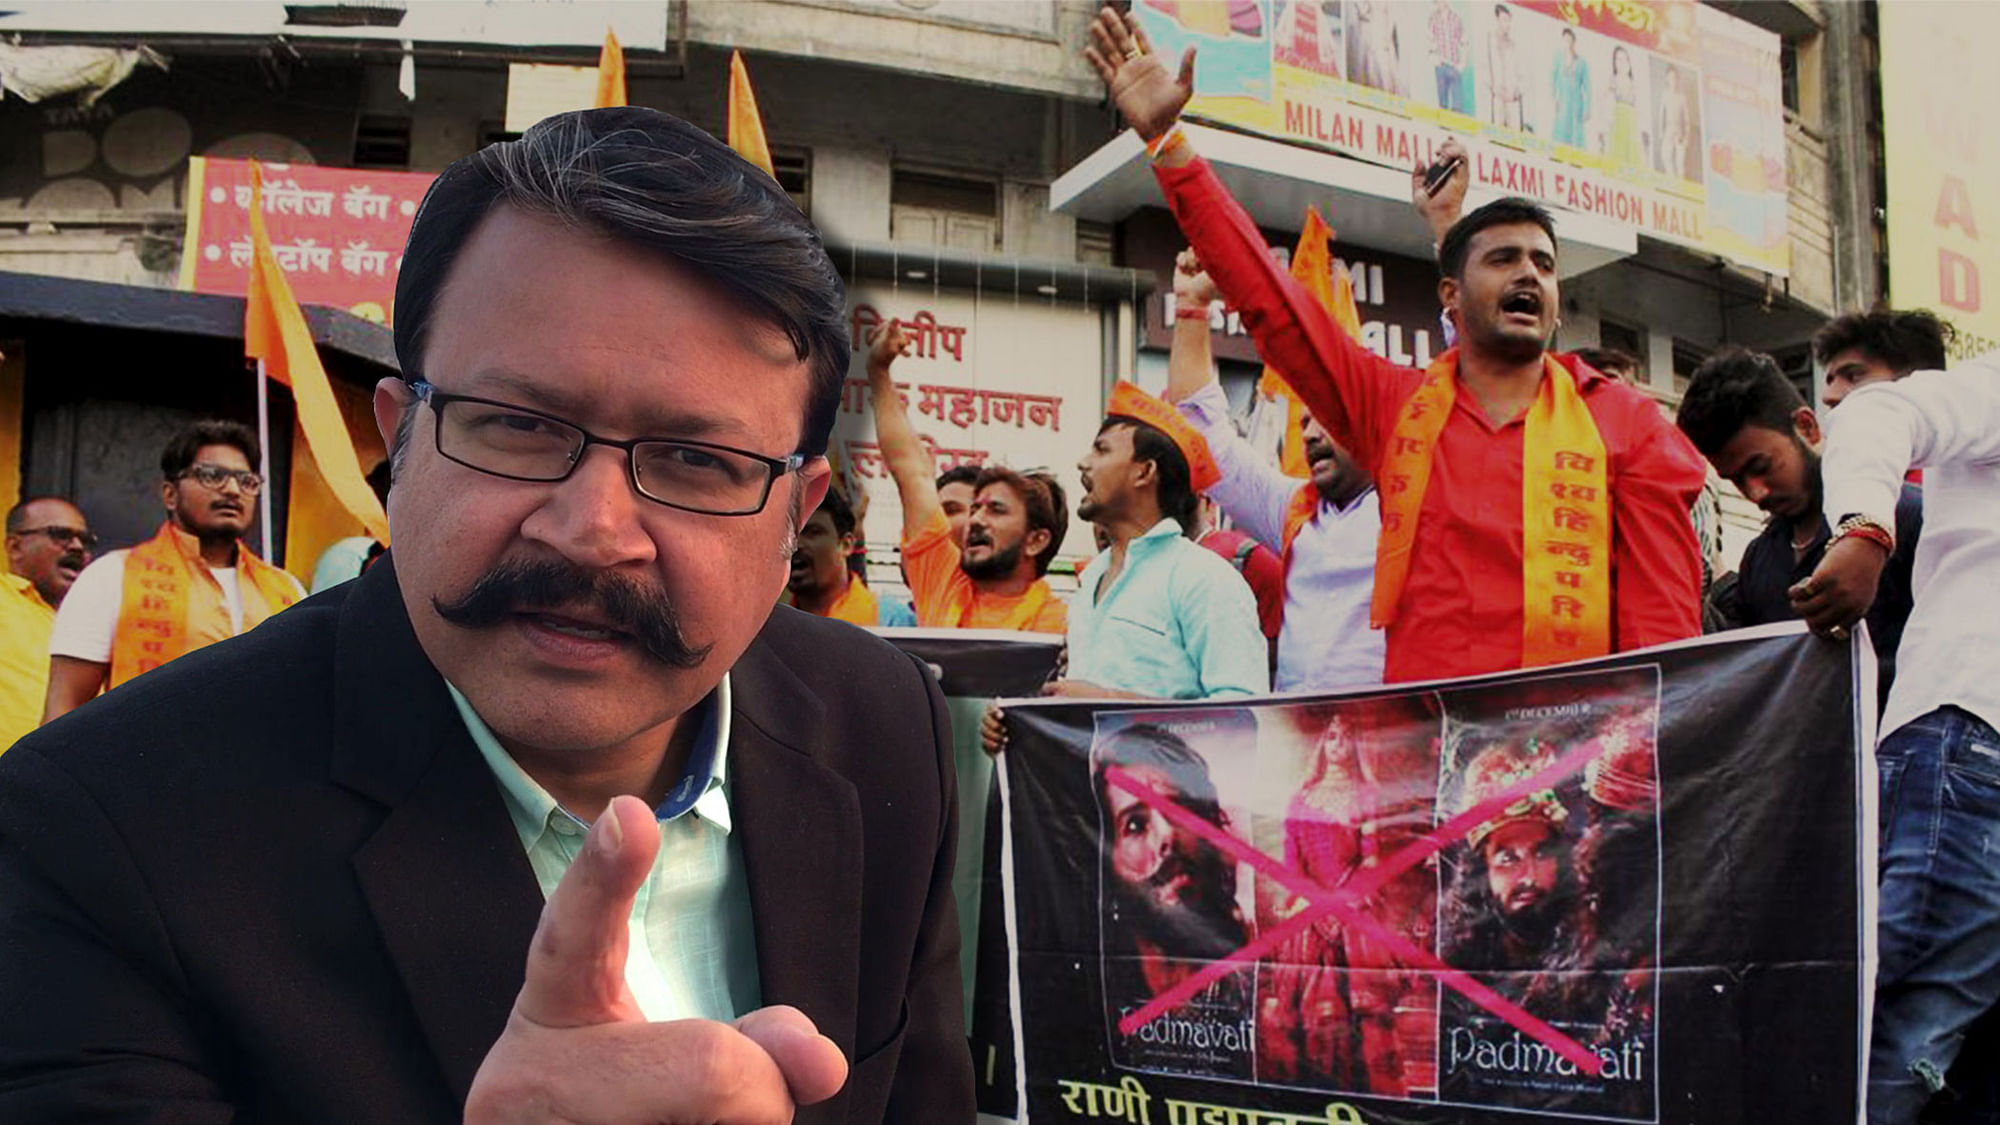 Violence surrounding the Padmavati film release